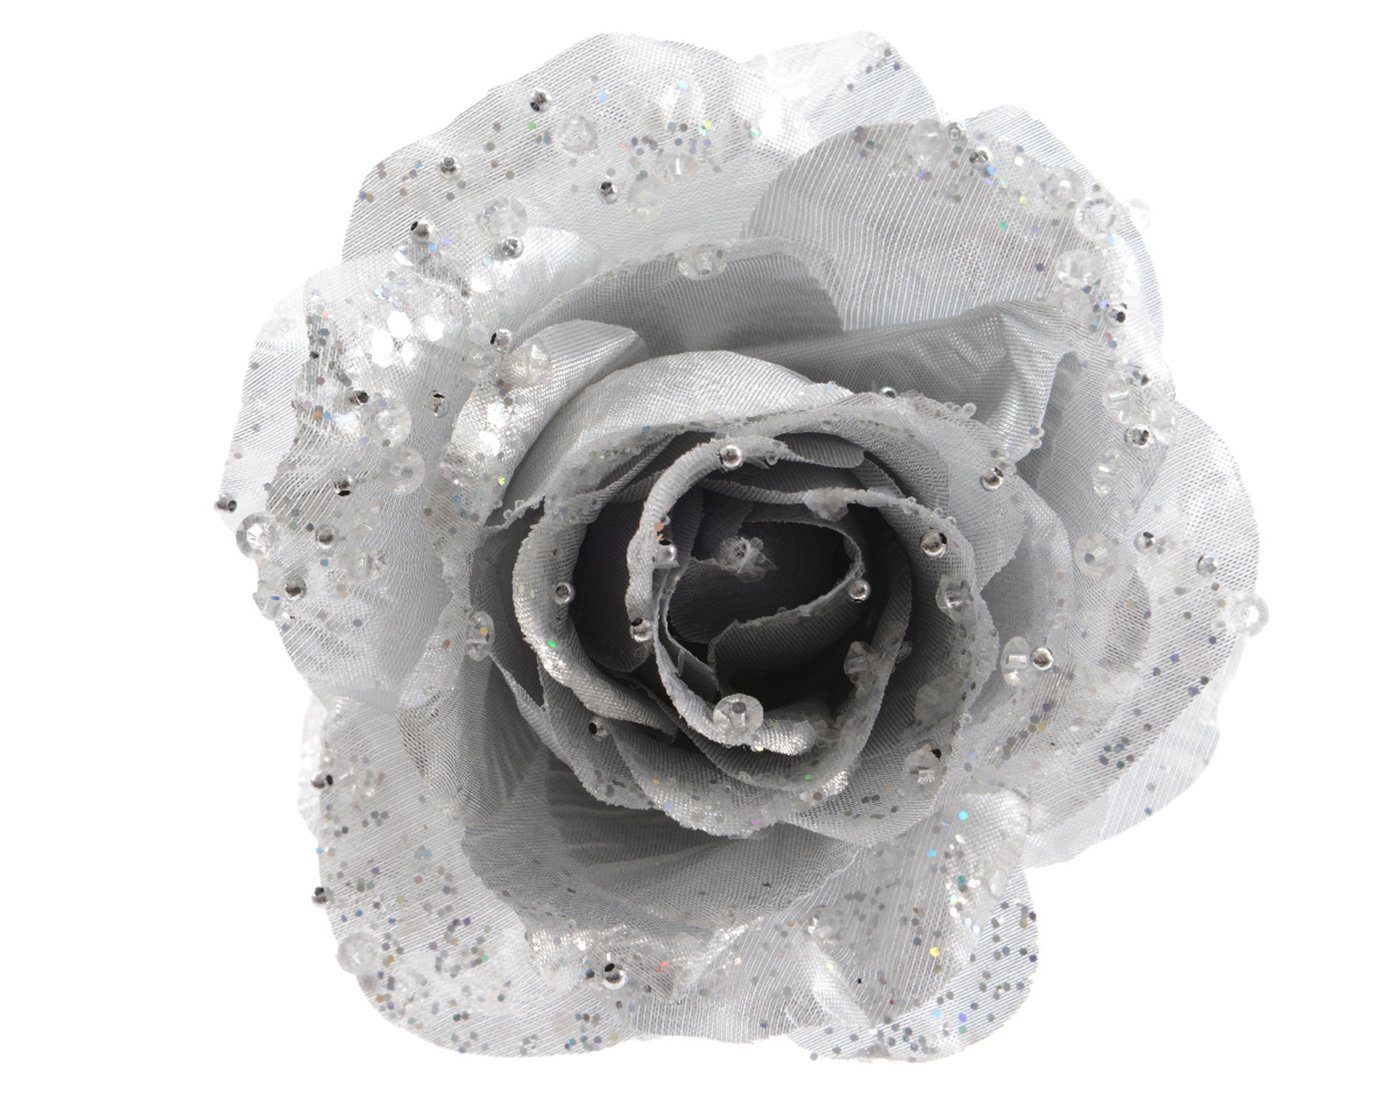 Kunstblume, Decoris season decorations, Kunstblumen Rose auf Clip 14cm silber